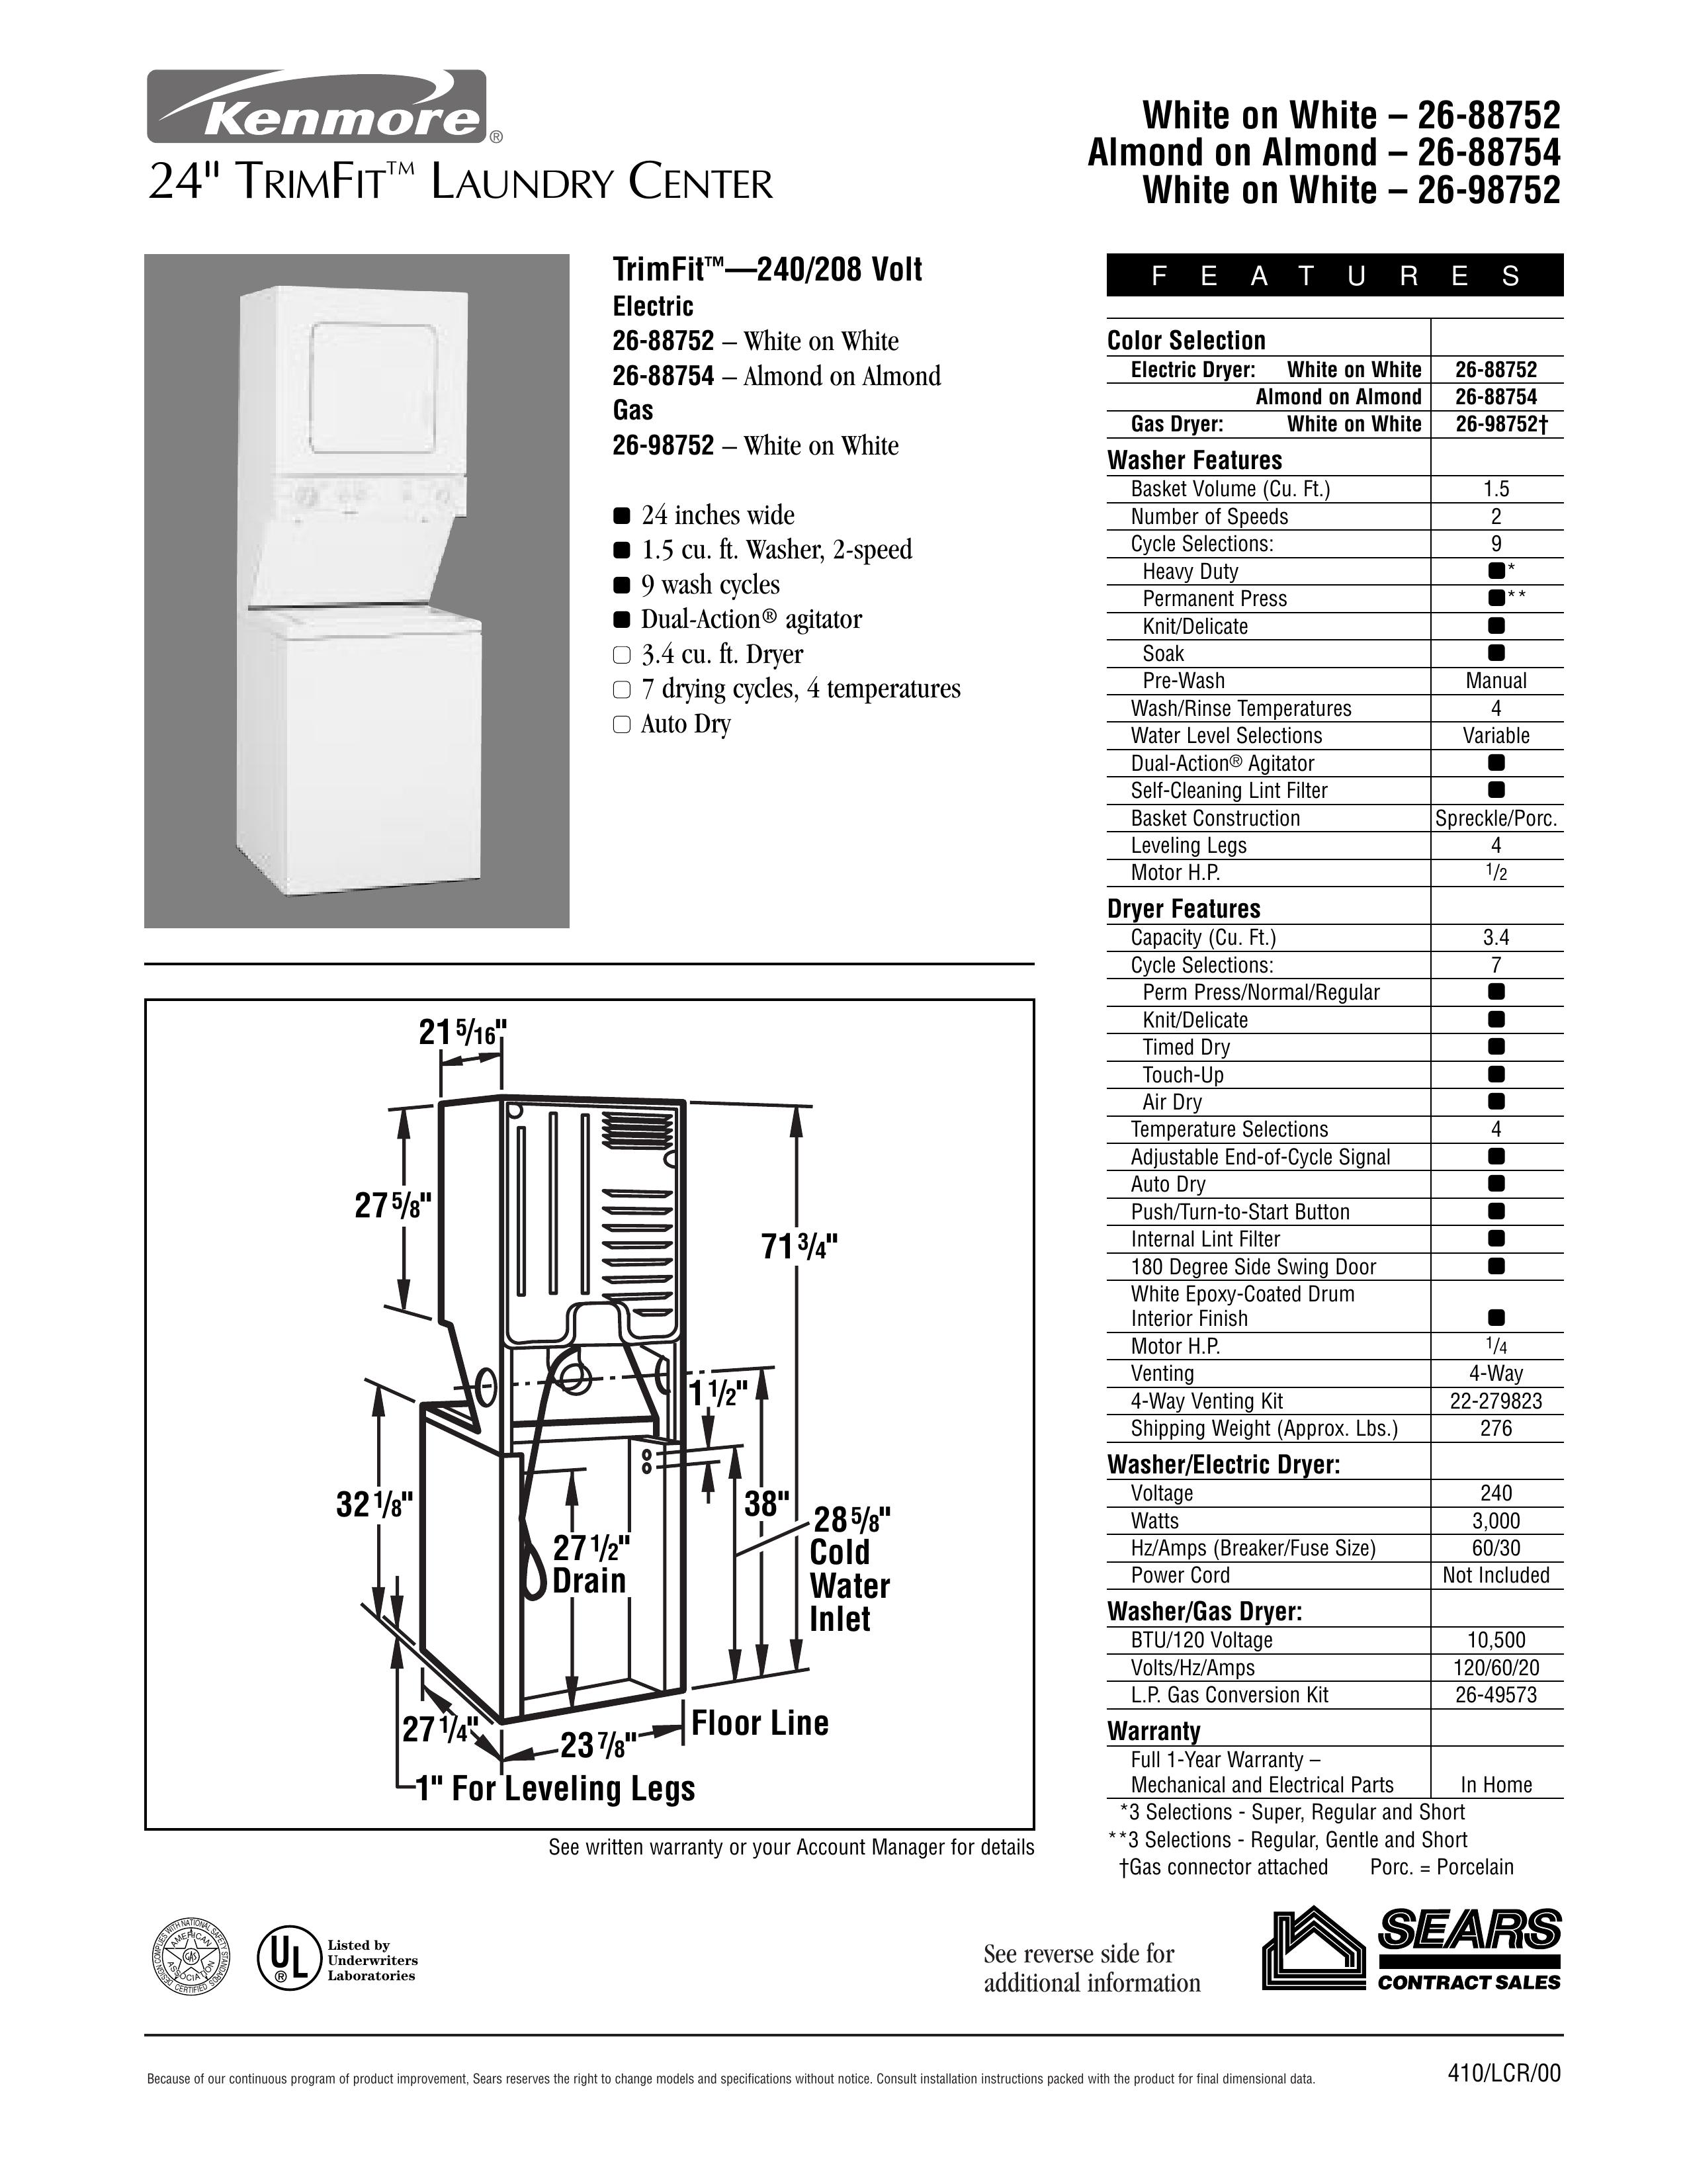 Kenmore 26-88752 Washer/Dryer User Manual